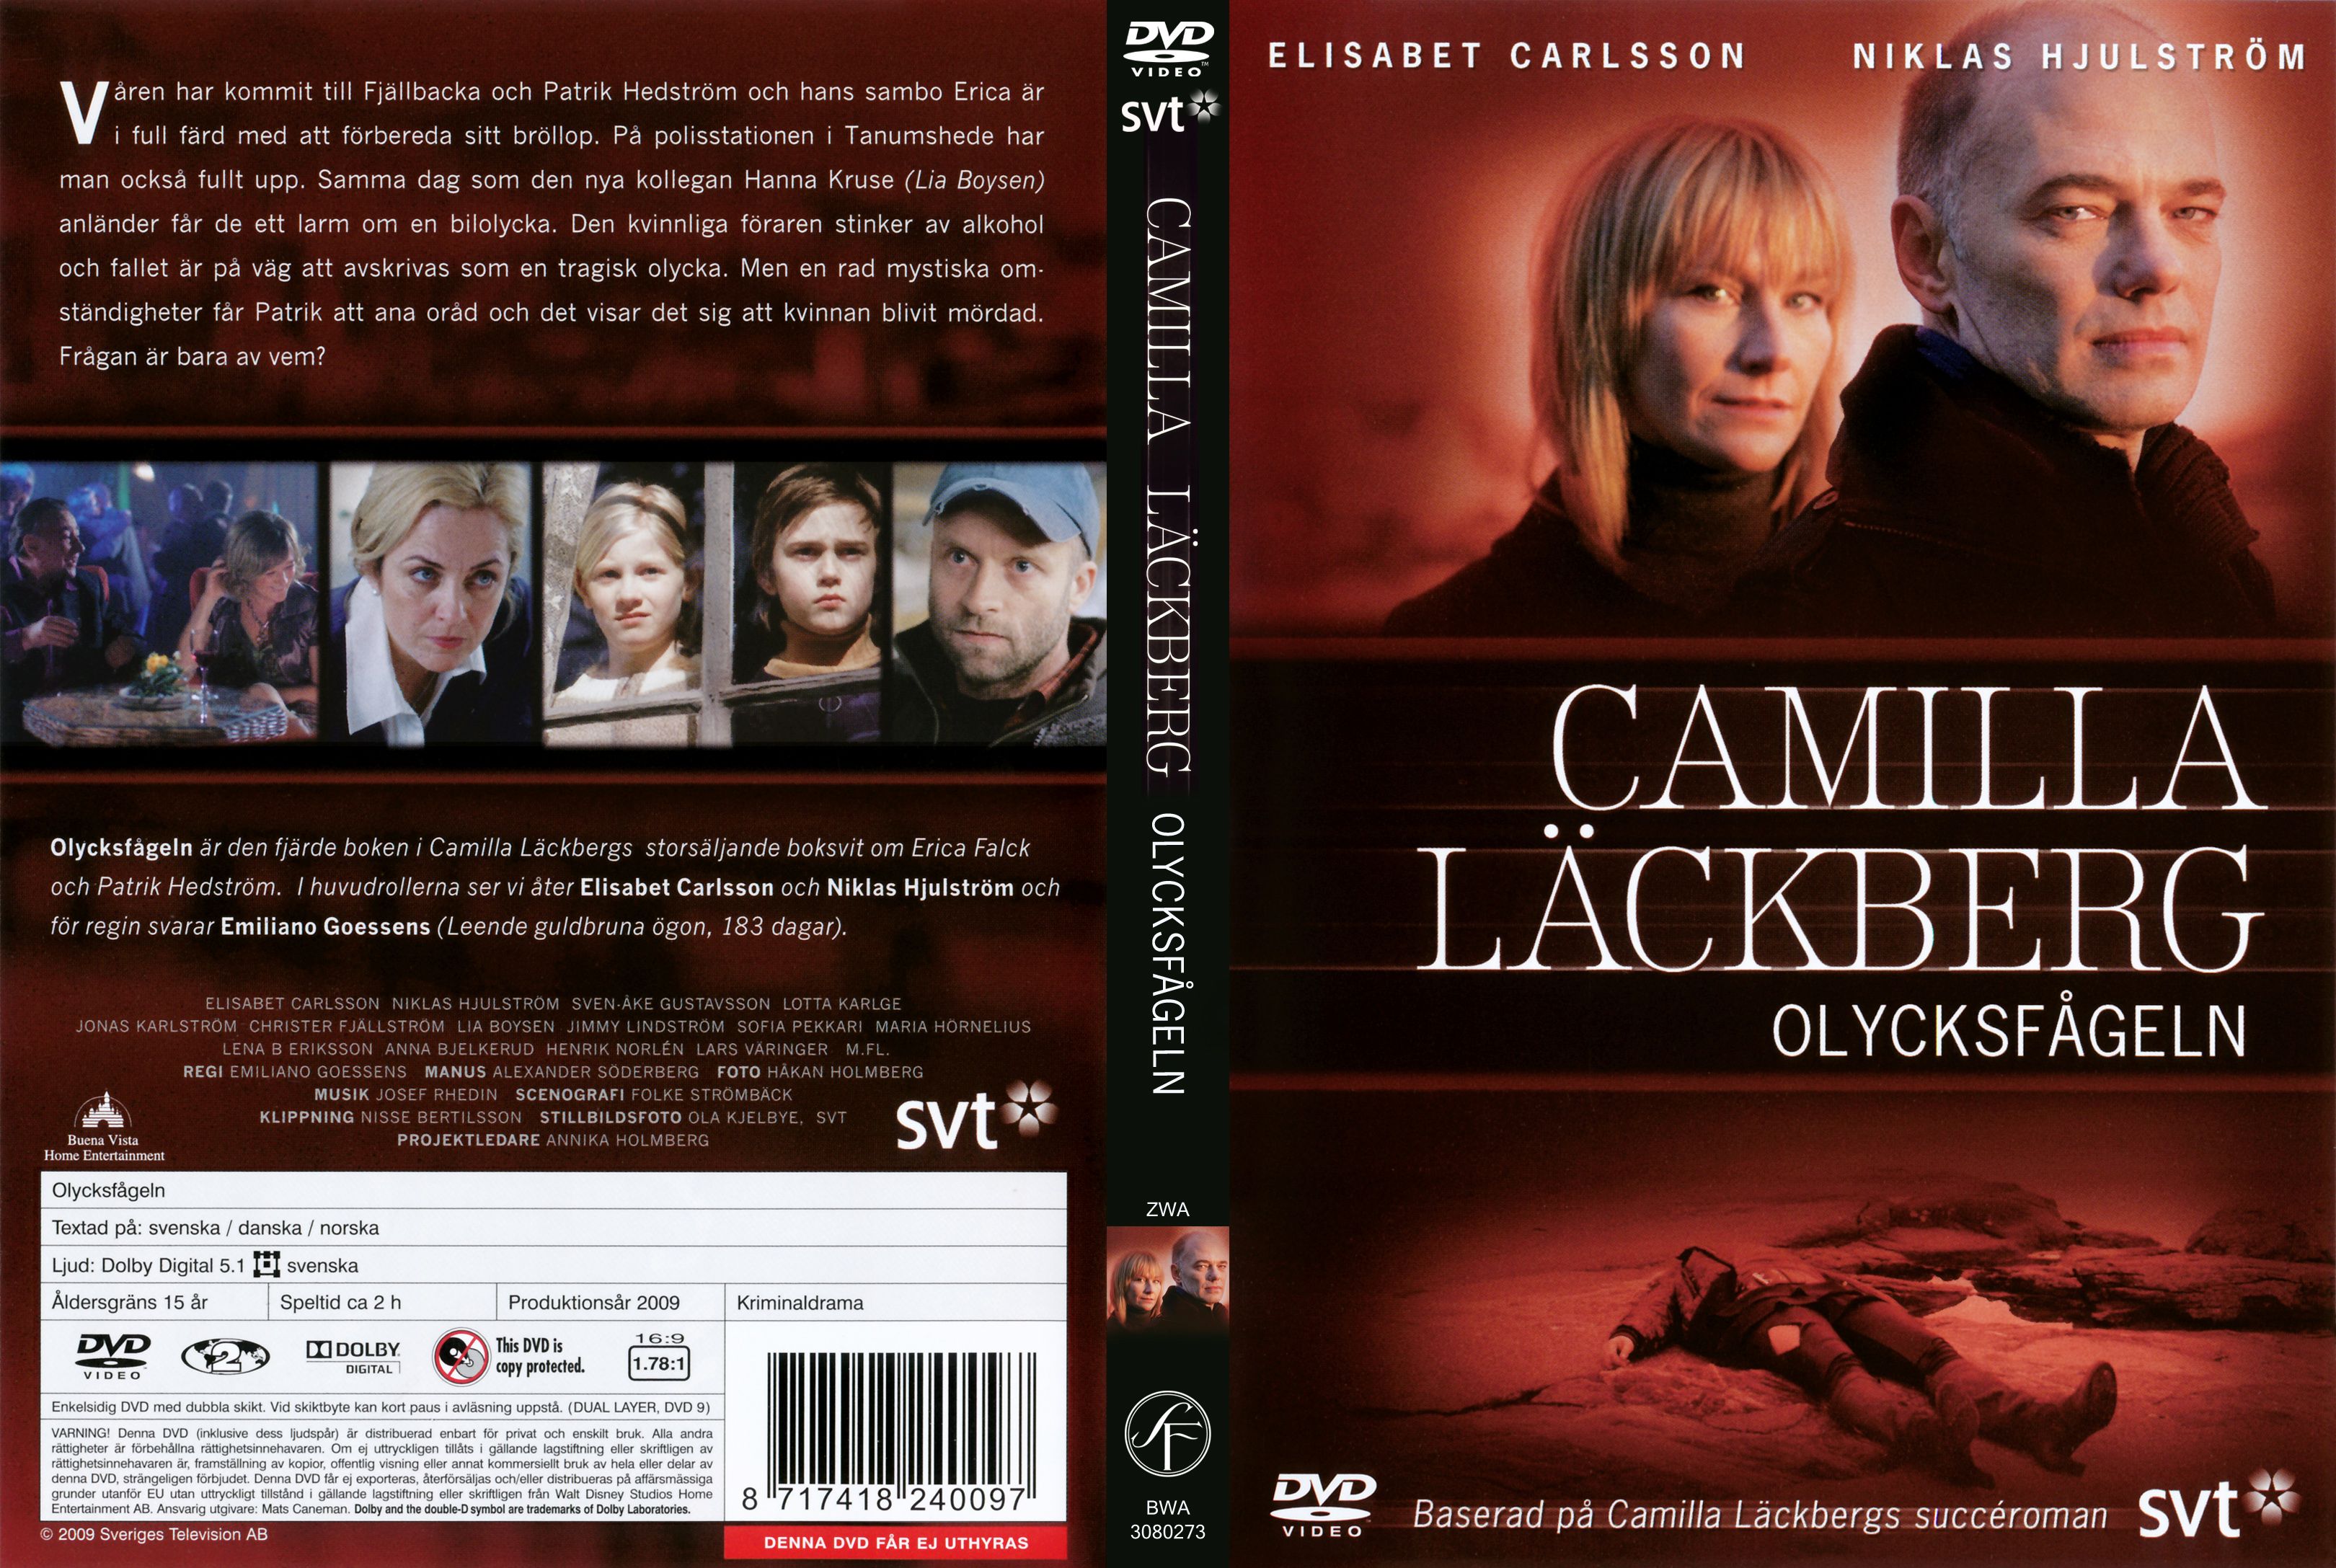 Camilla Lackberg DvD 4 van 4 - Olycksfågeln 2010